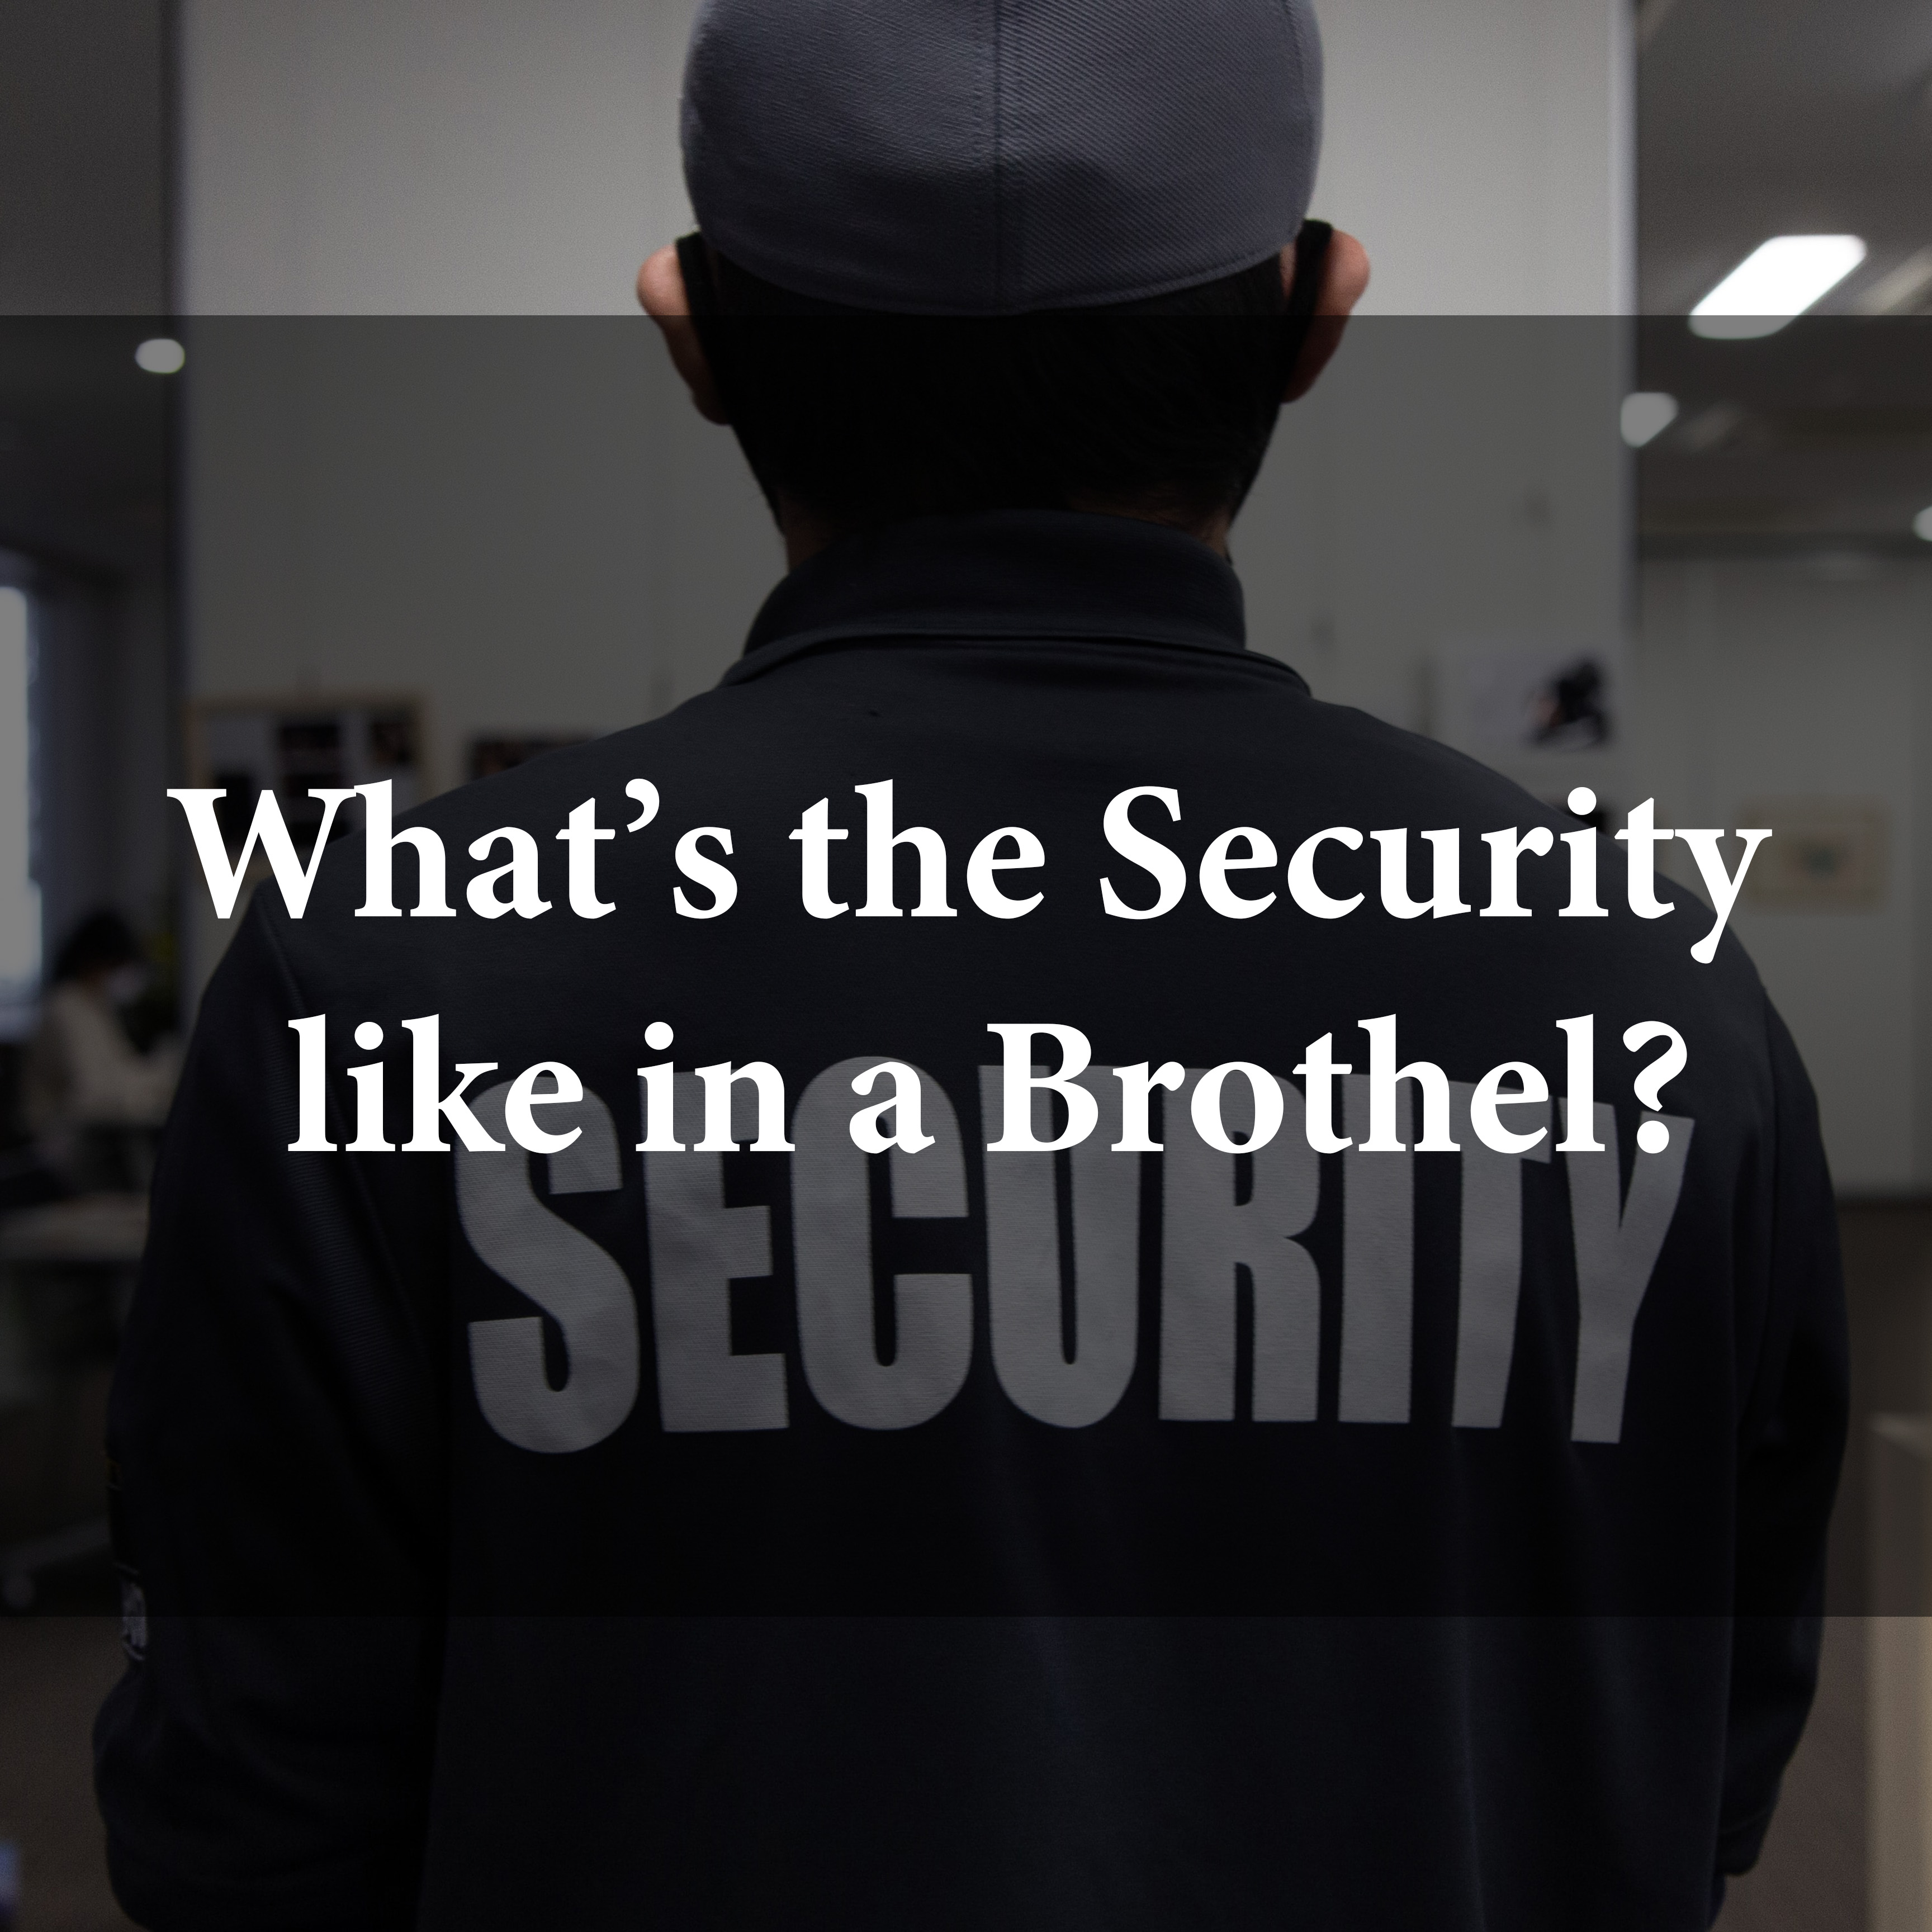 Brothel security